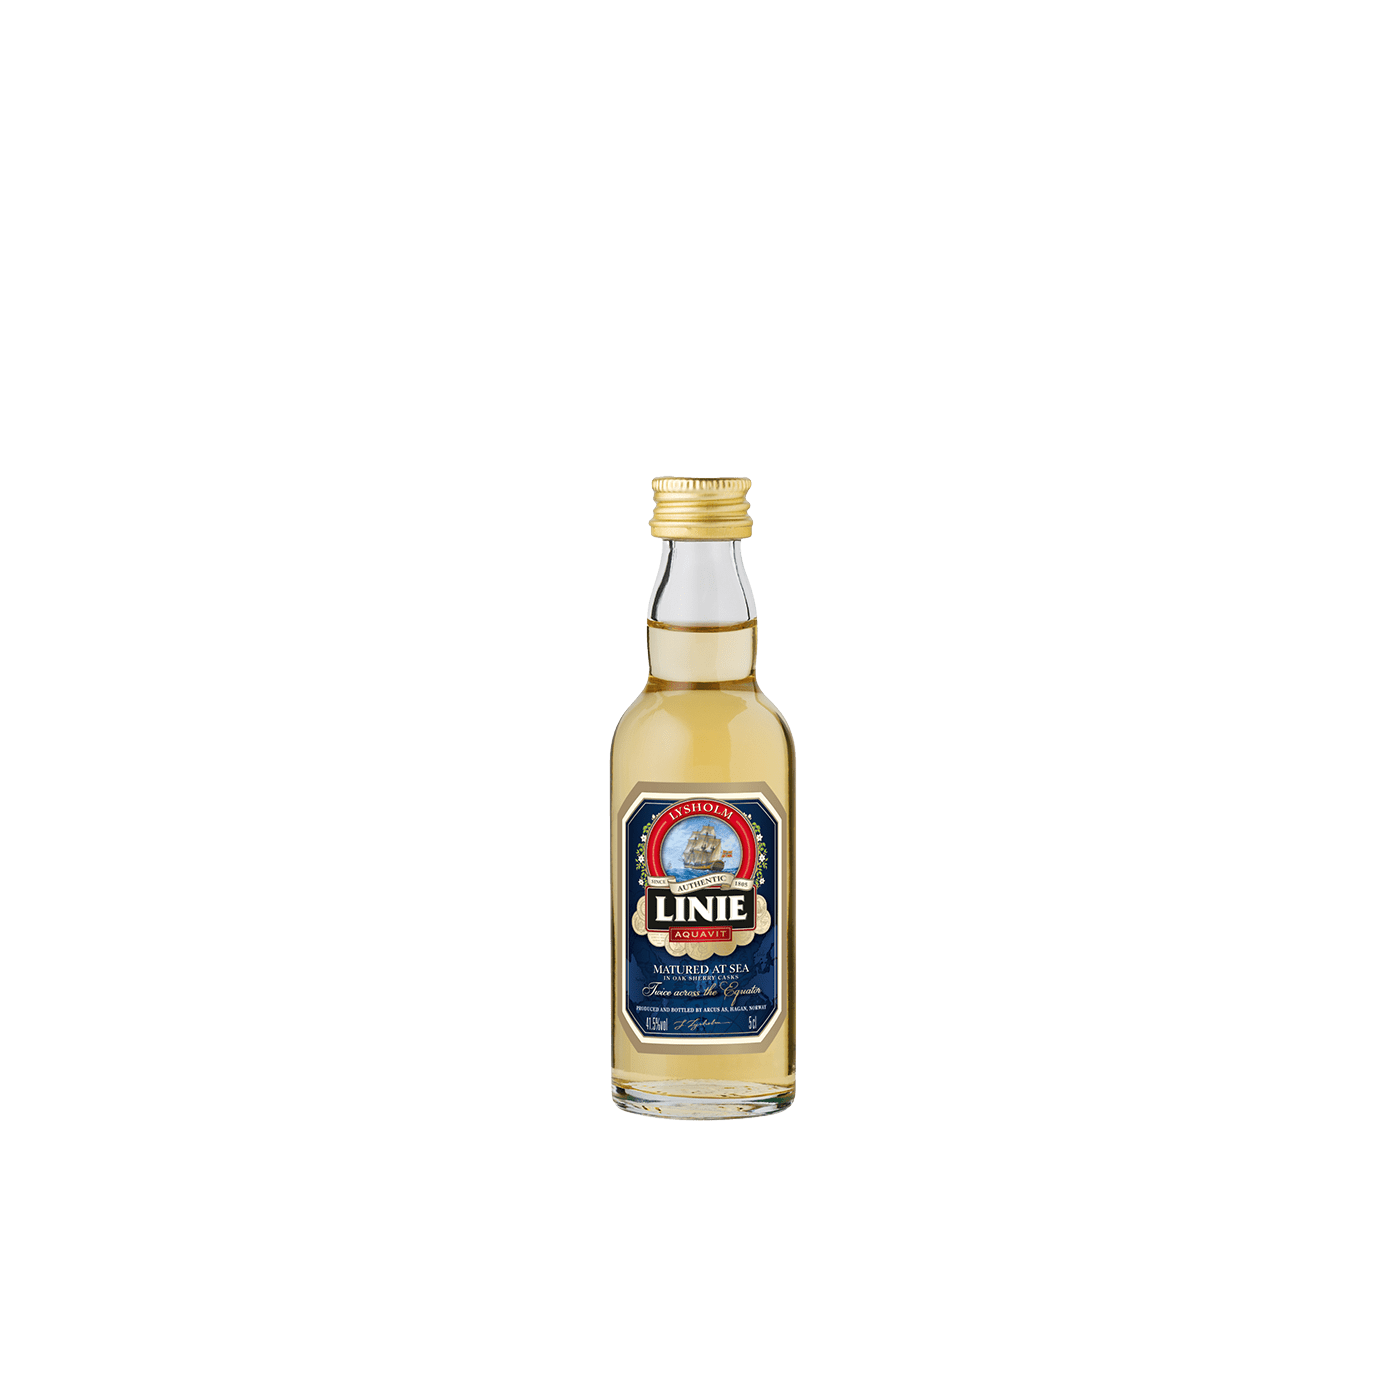 Linie Aquavit Original Miniature 41,5% Spirits | Nordic 5 Spirits cl Nordic 